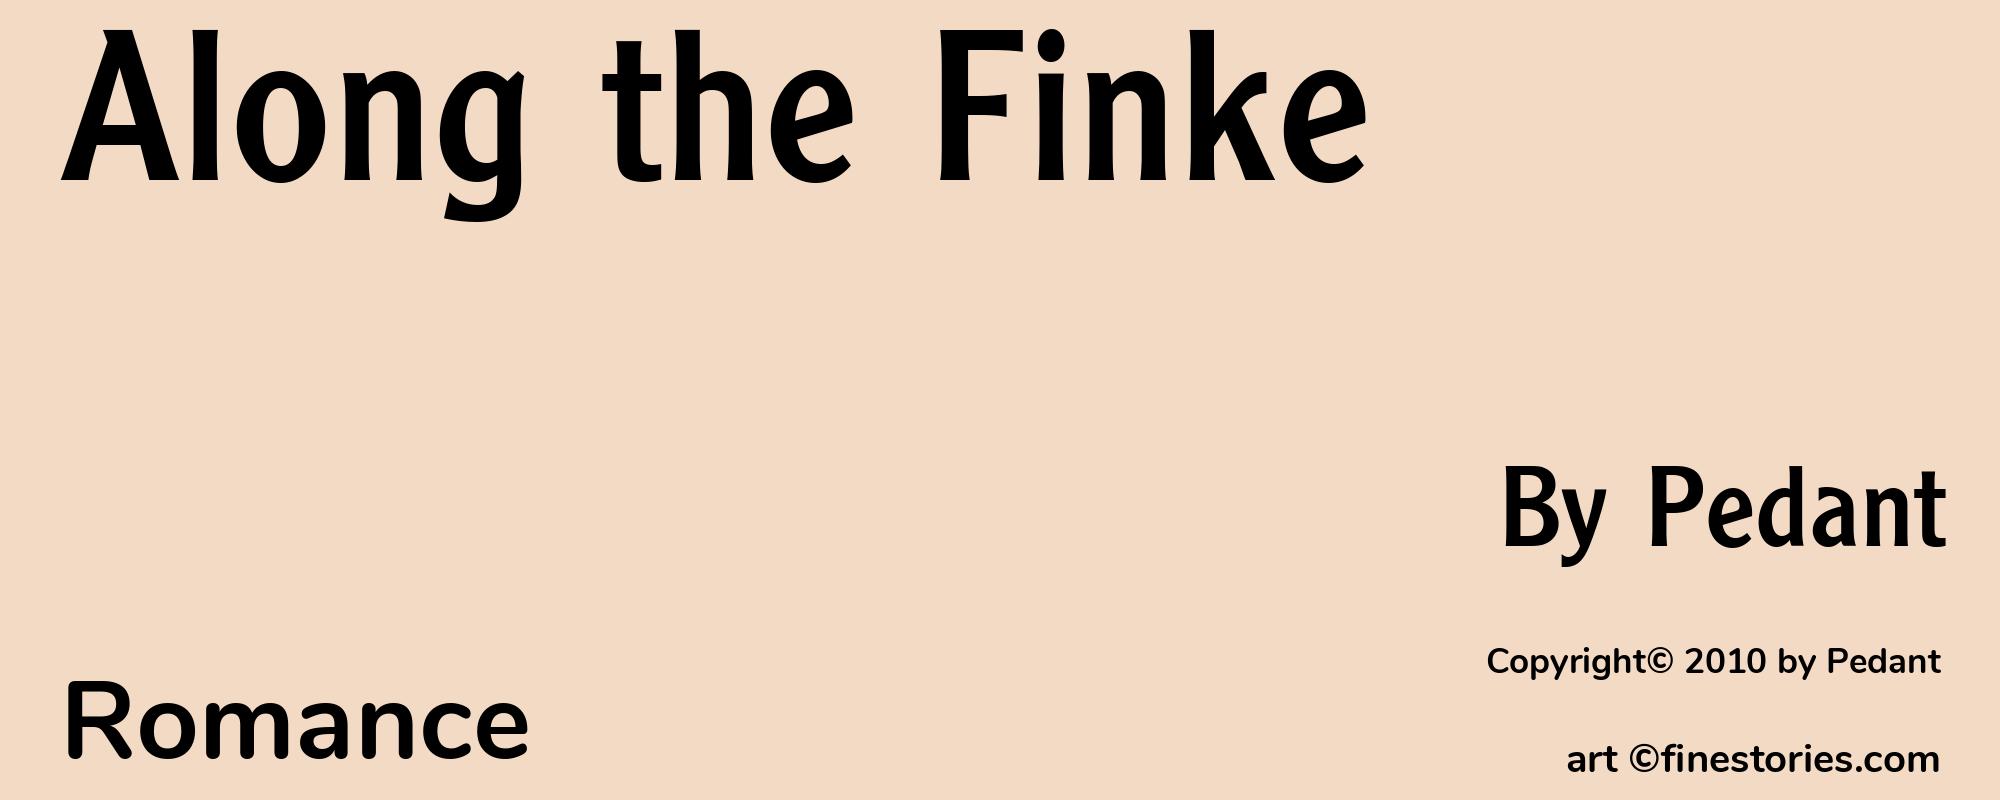 Along the Finke - Cover